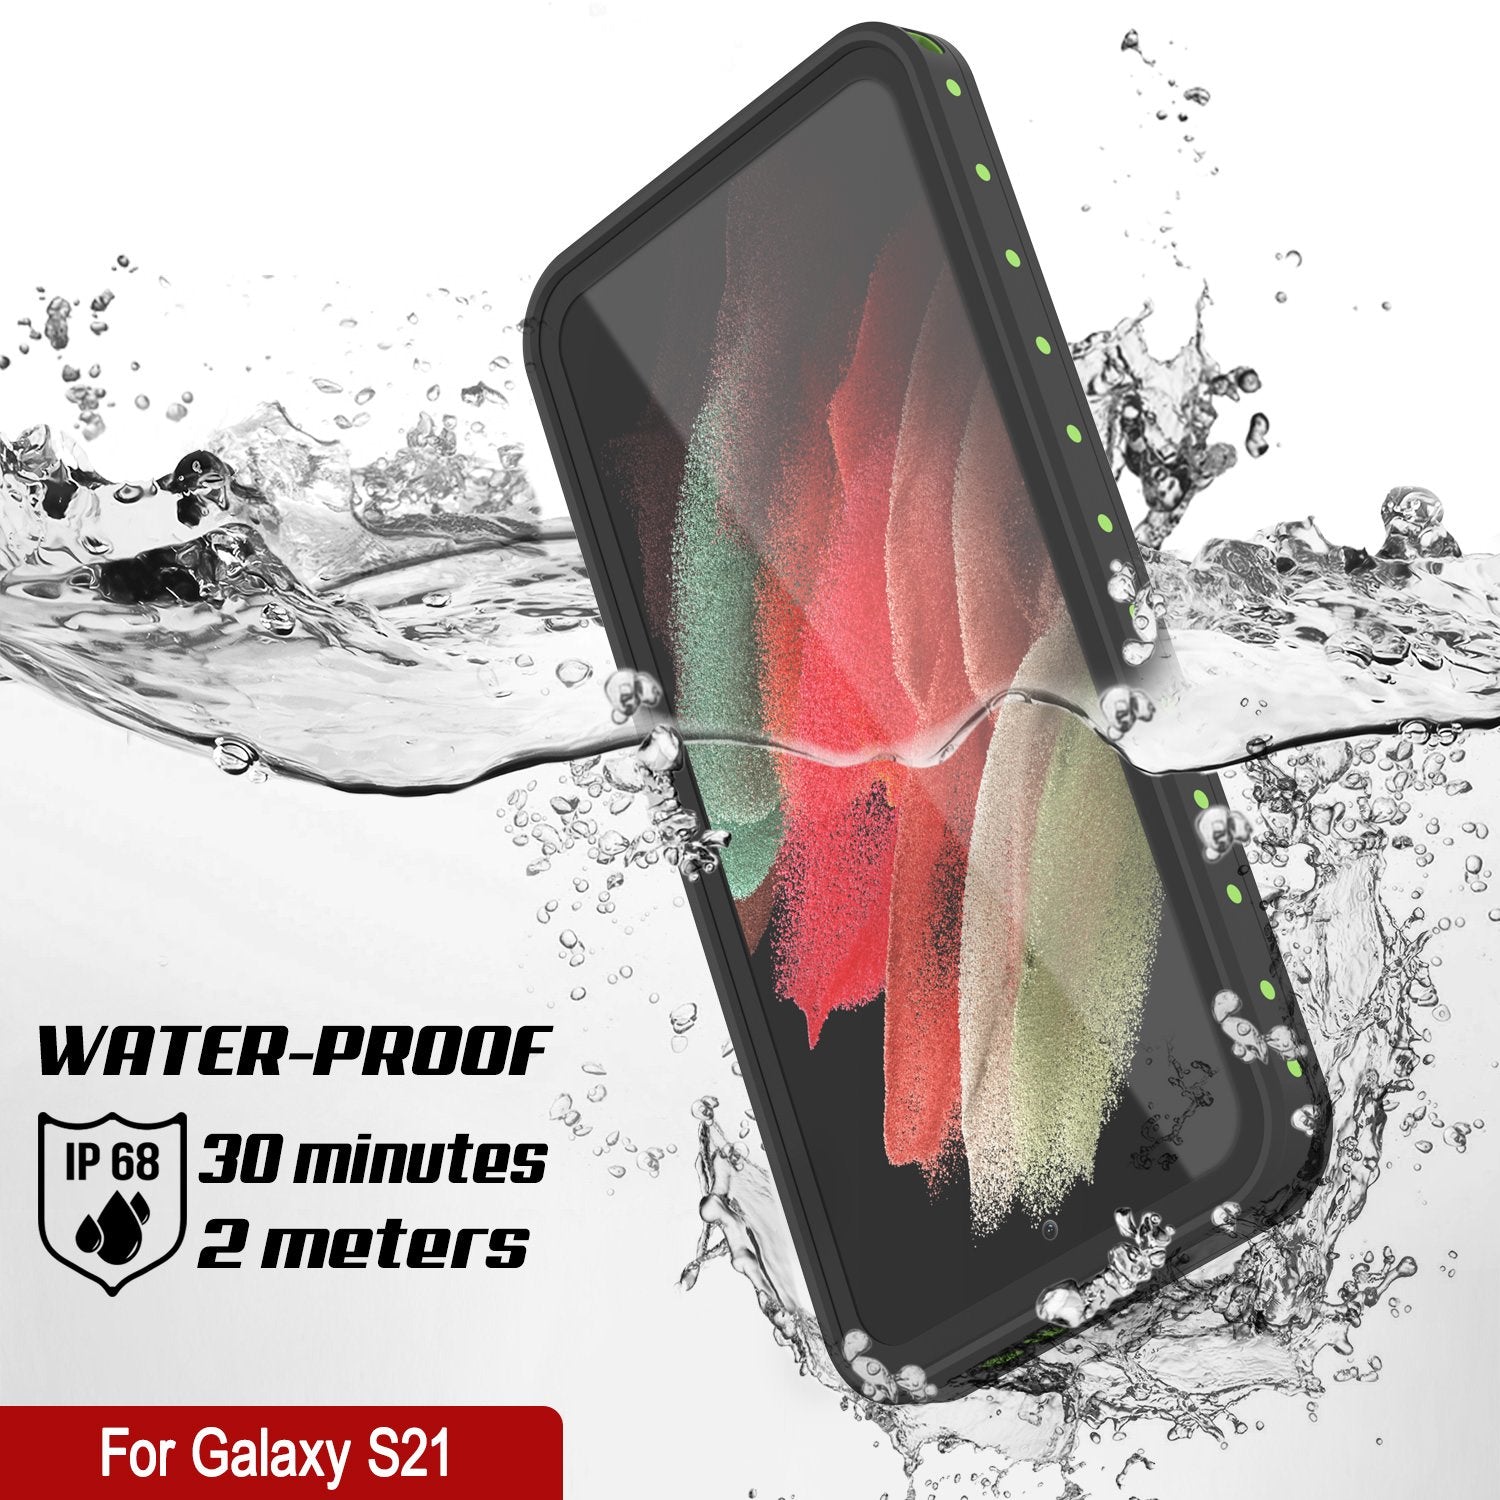 Galaxy S21 Waterproof Case PunkCase StudStar Light Green Thin 6.6ft Underwater IP68 ShockProof